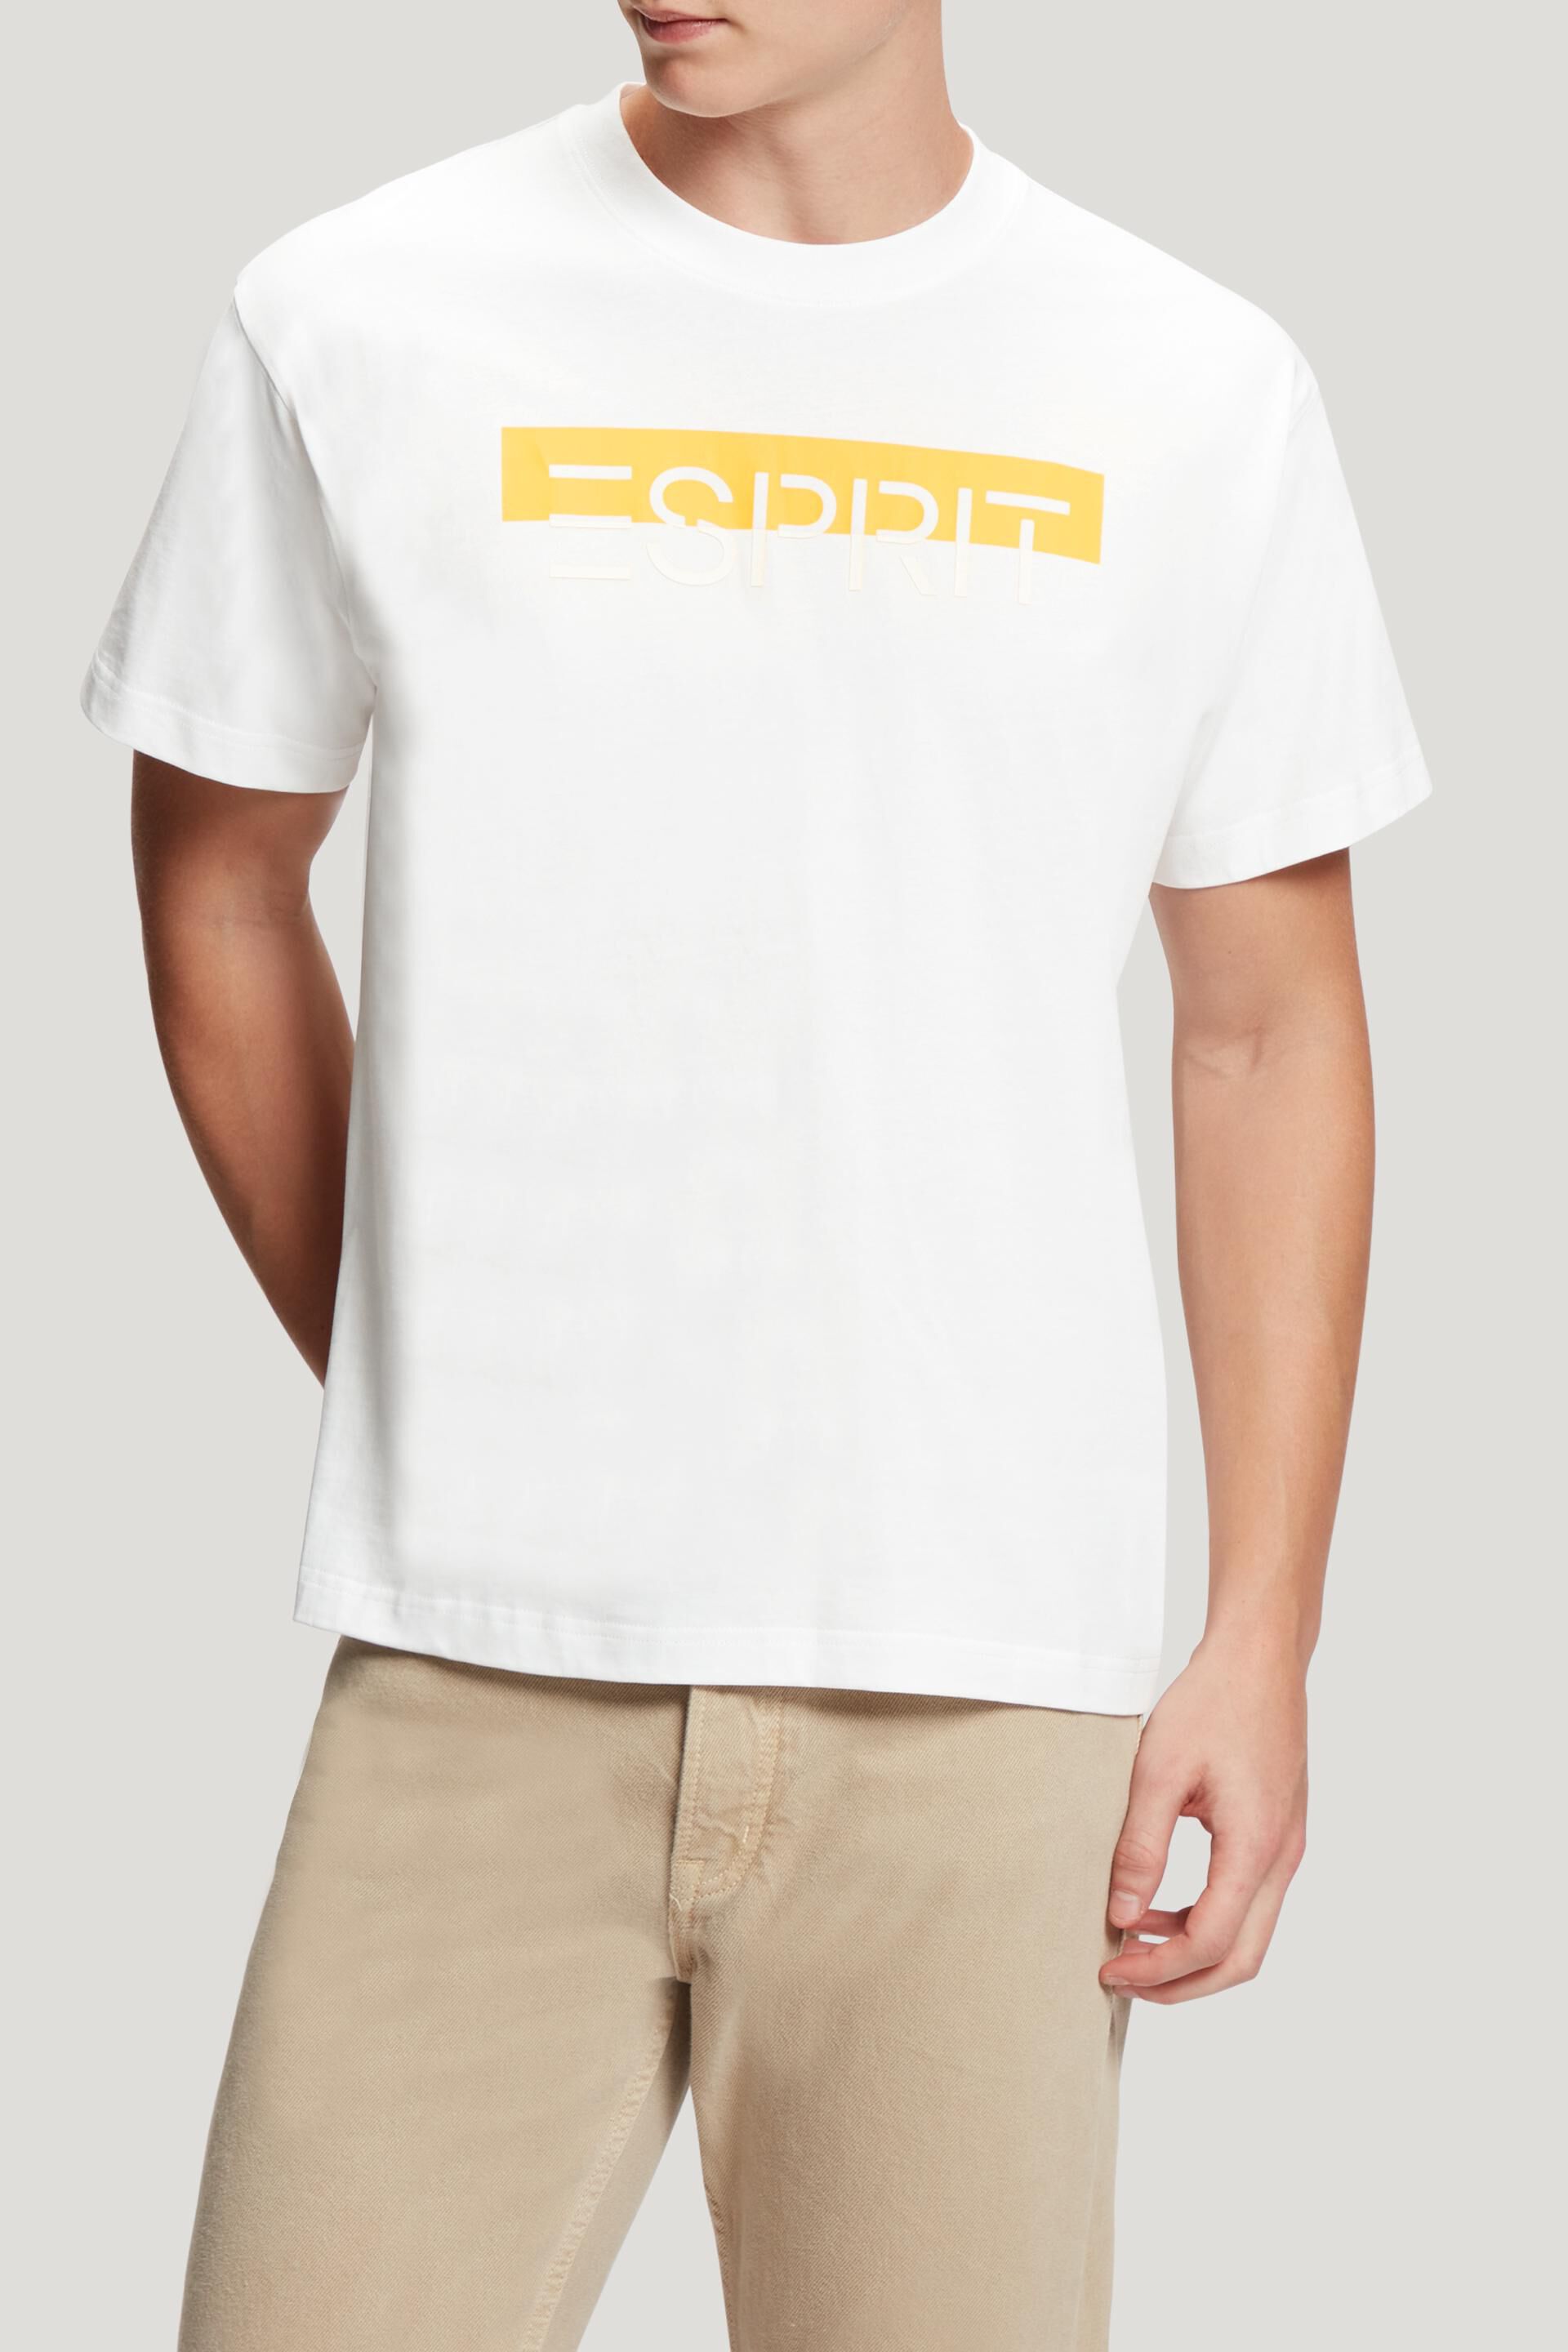 Mattglänzendes T-Shirt mit Logo-Applikation